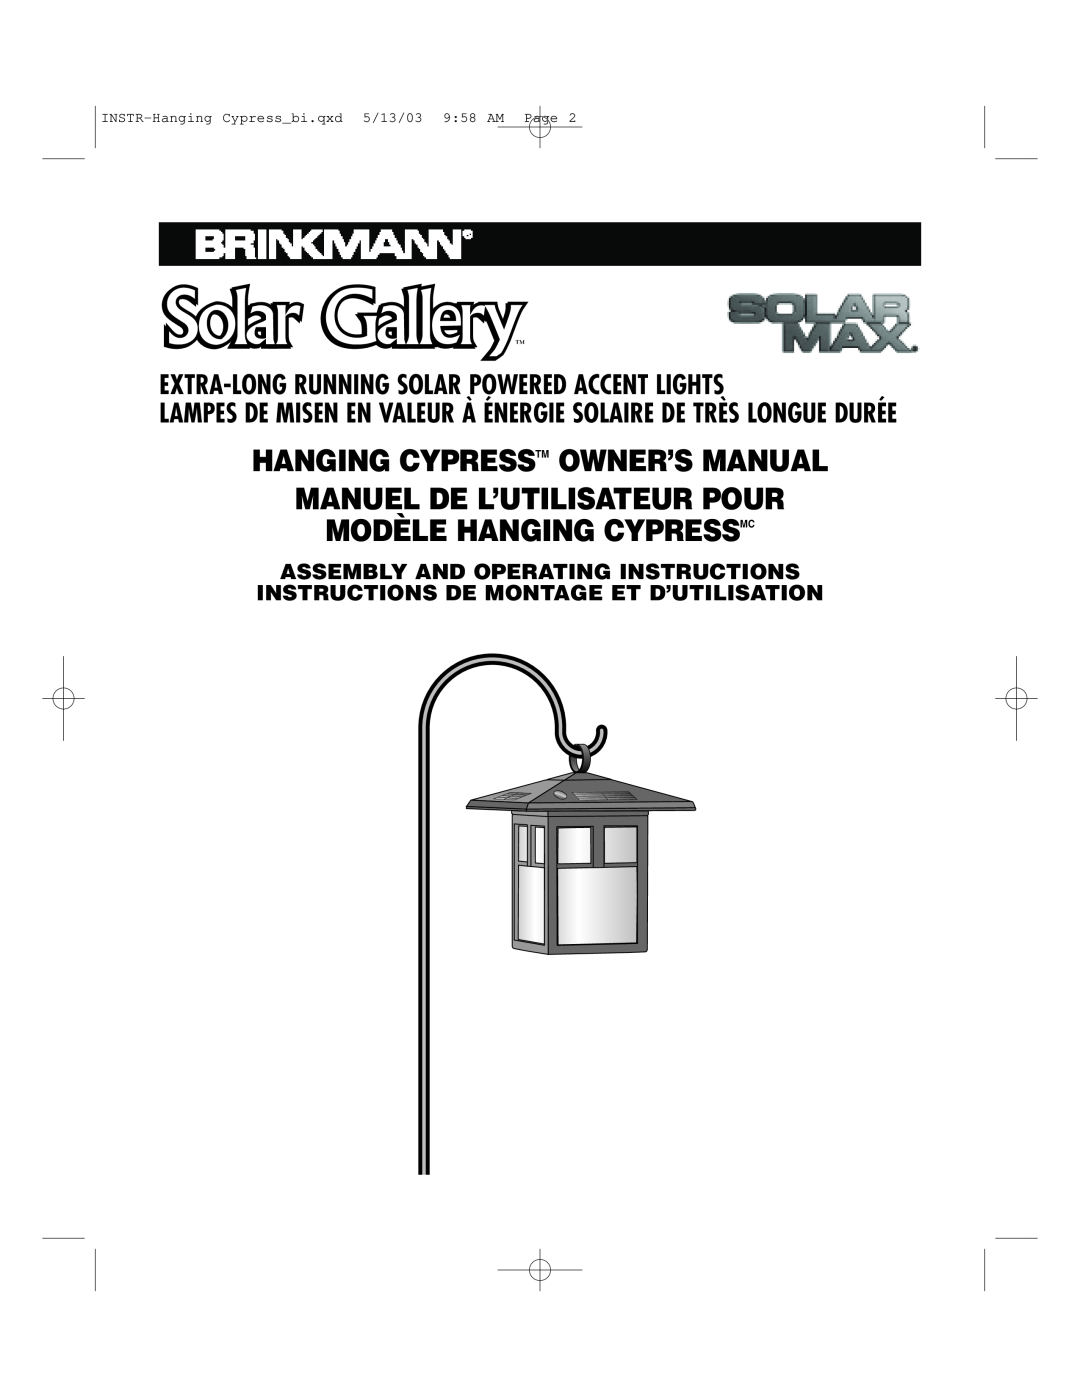 Brinkmann 822-1506-B owner manual Modèle Hanging Cypressmc, INSTR-Hanging Cypressbi.qxd 5/13/03 958 AM Page, Solar Gallery 